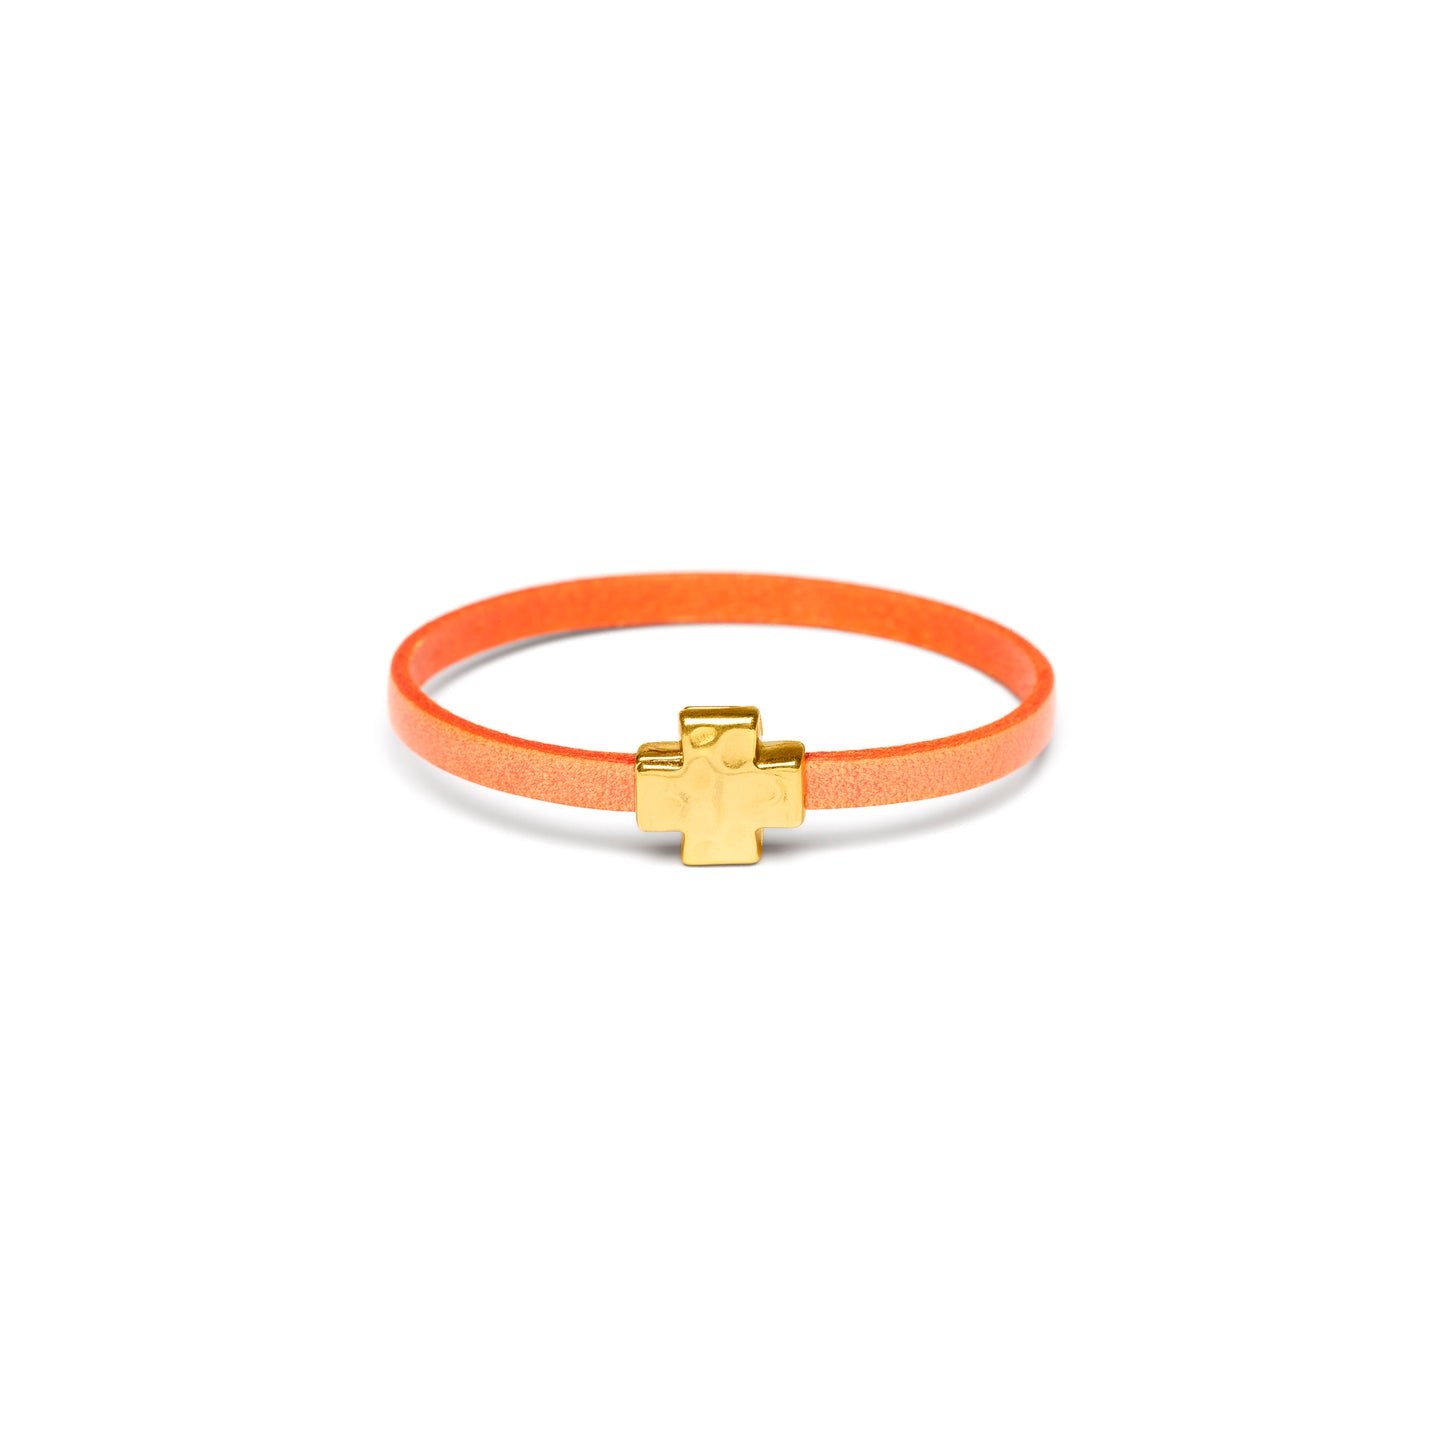 "Wrap it Up Bracelet" with Gold Cross - Single Length - Orange